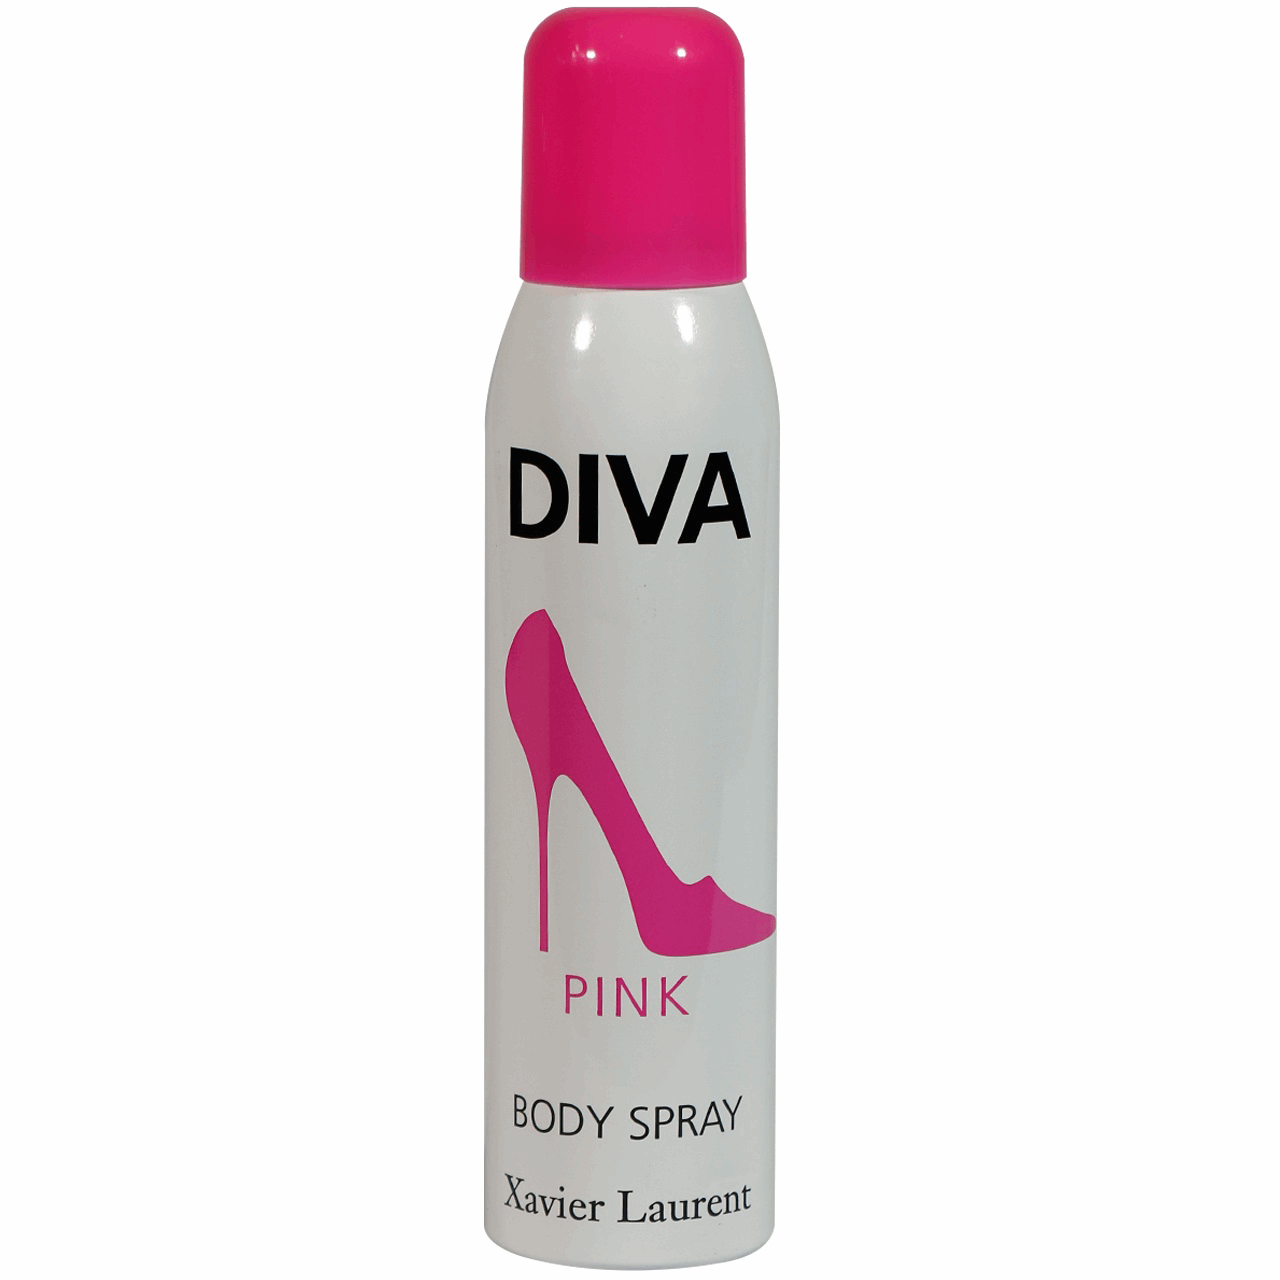 اسپری ضد تعریق زنانه زاویر لوران مدل Diva Pink حجم 150 میلی لیتر